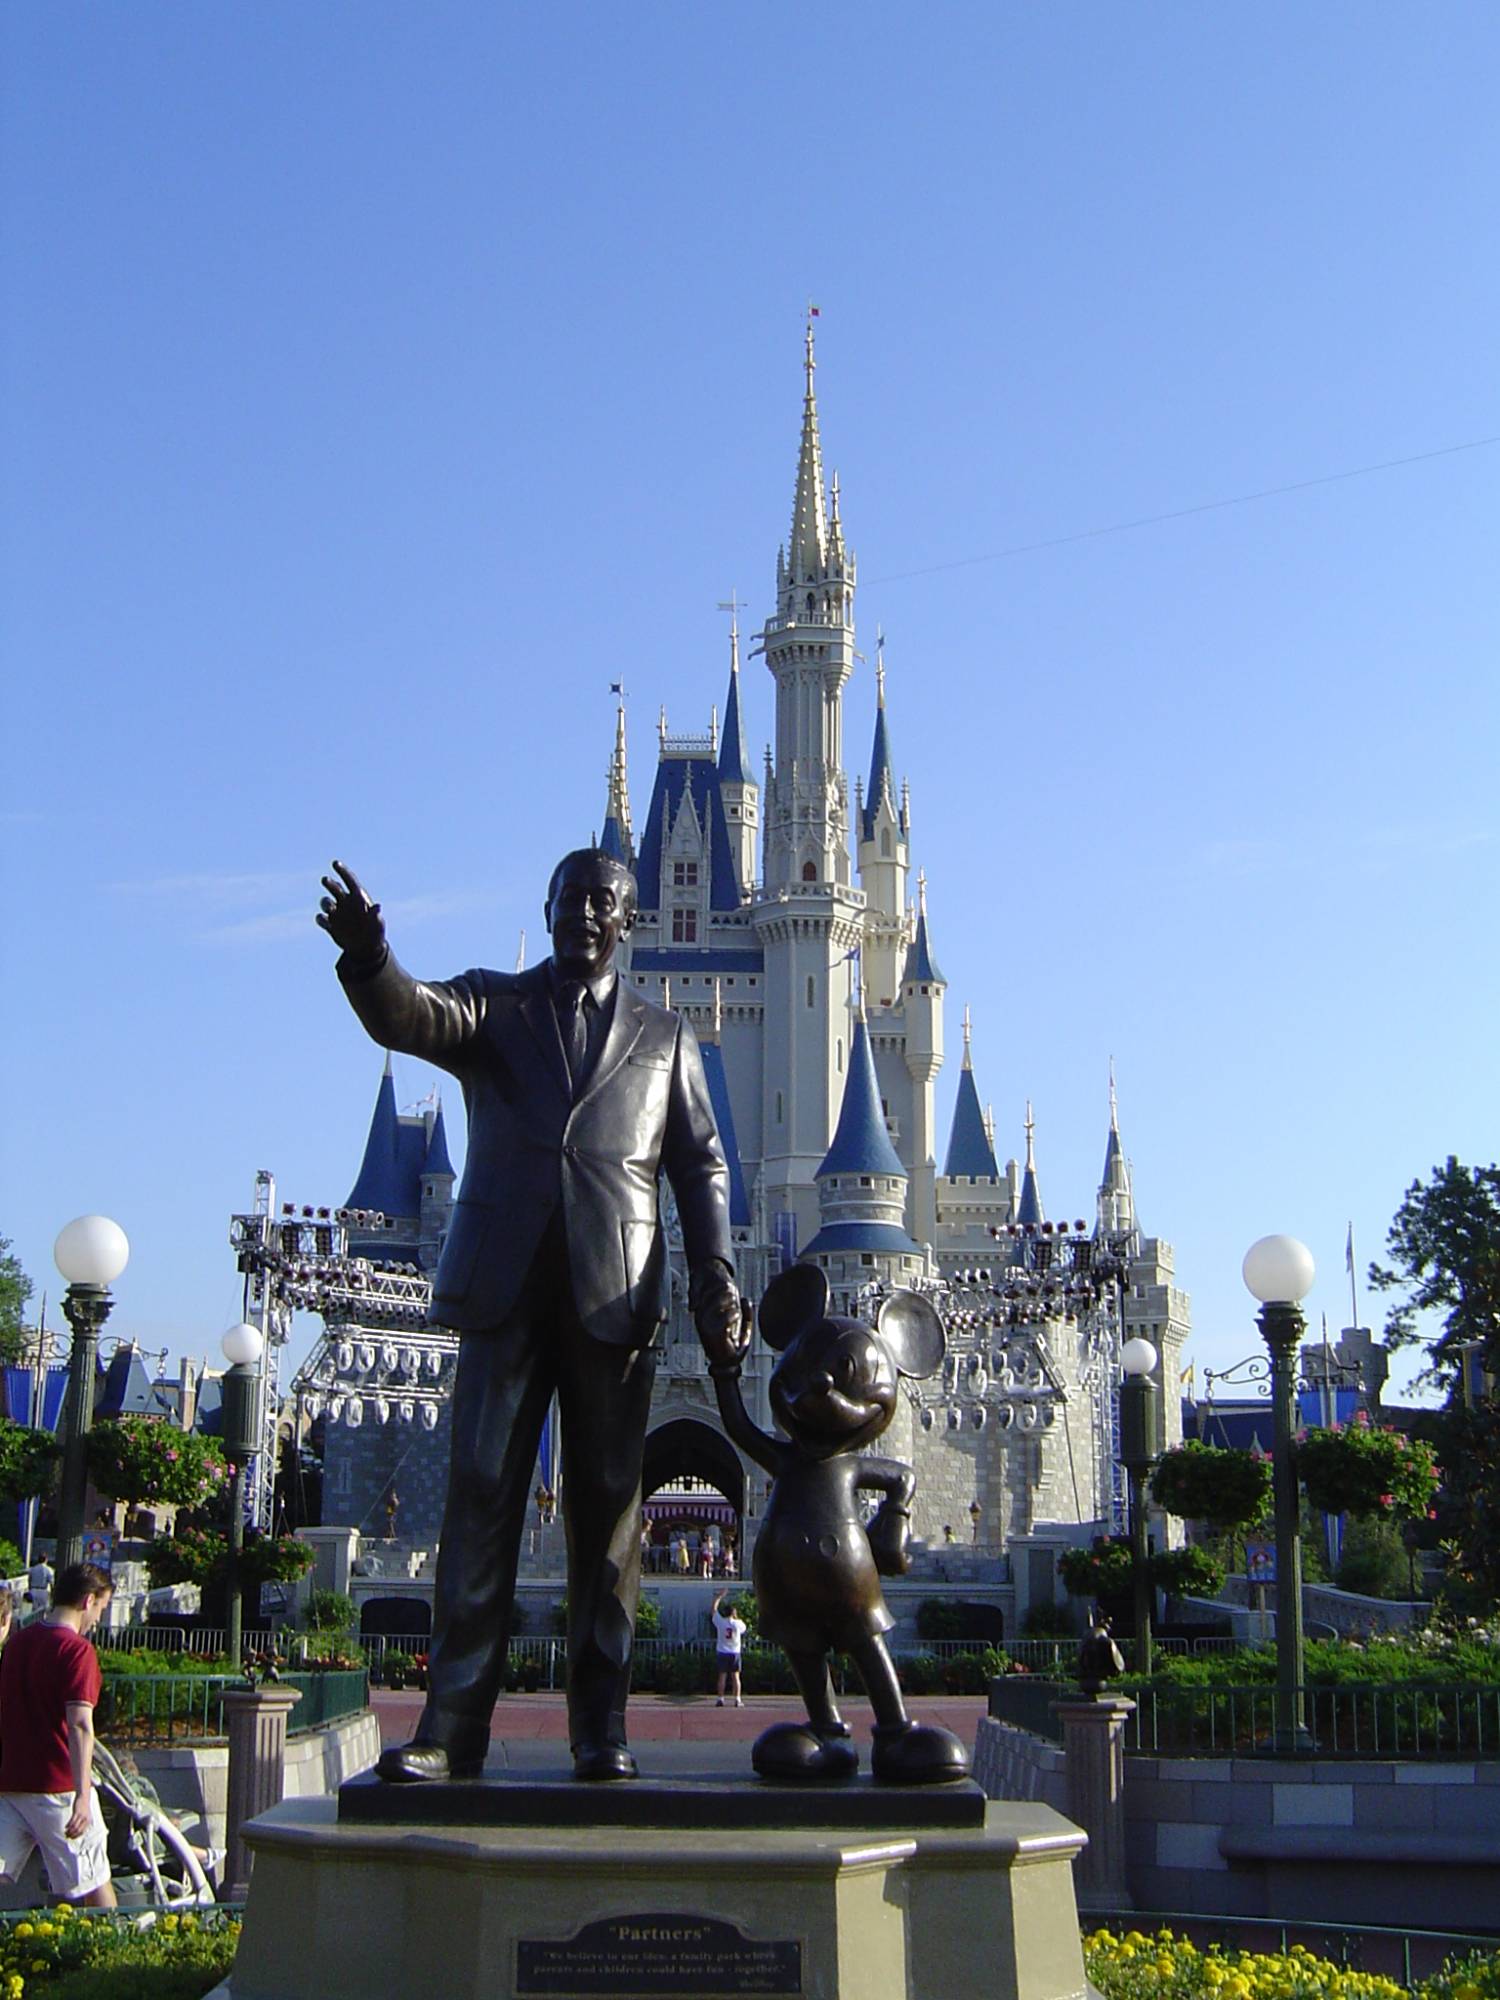 Magic Kingdom - Cinderella's Castle and partners statue